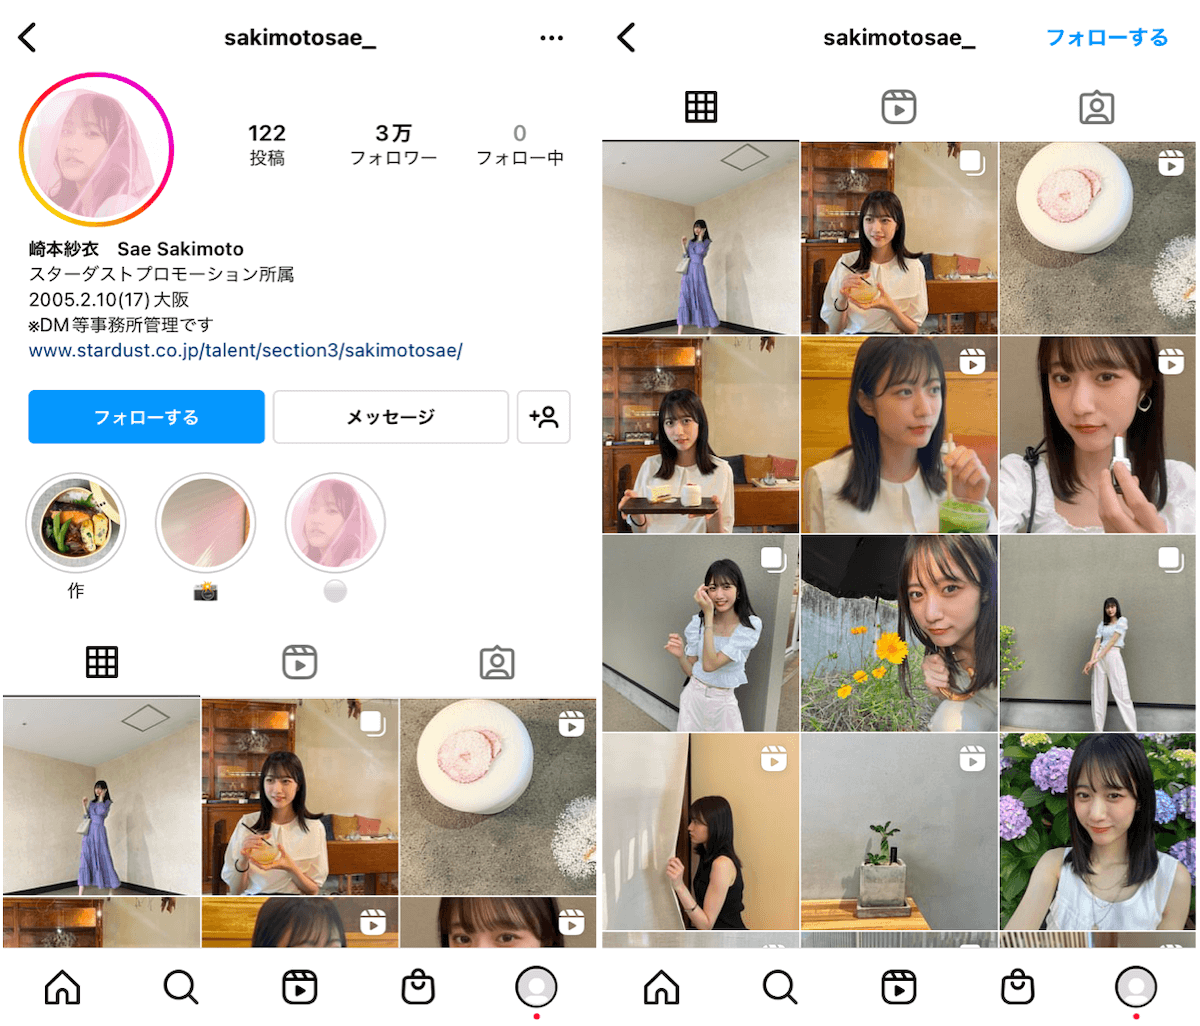 Instagram-teen-fashion-high-school-sakimotosae_